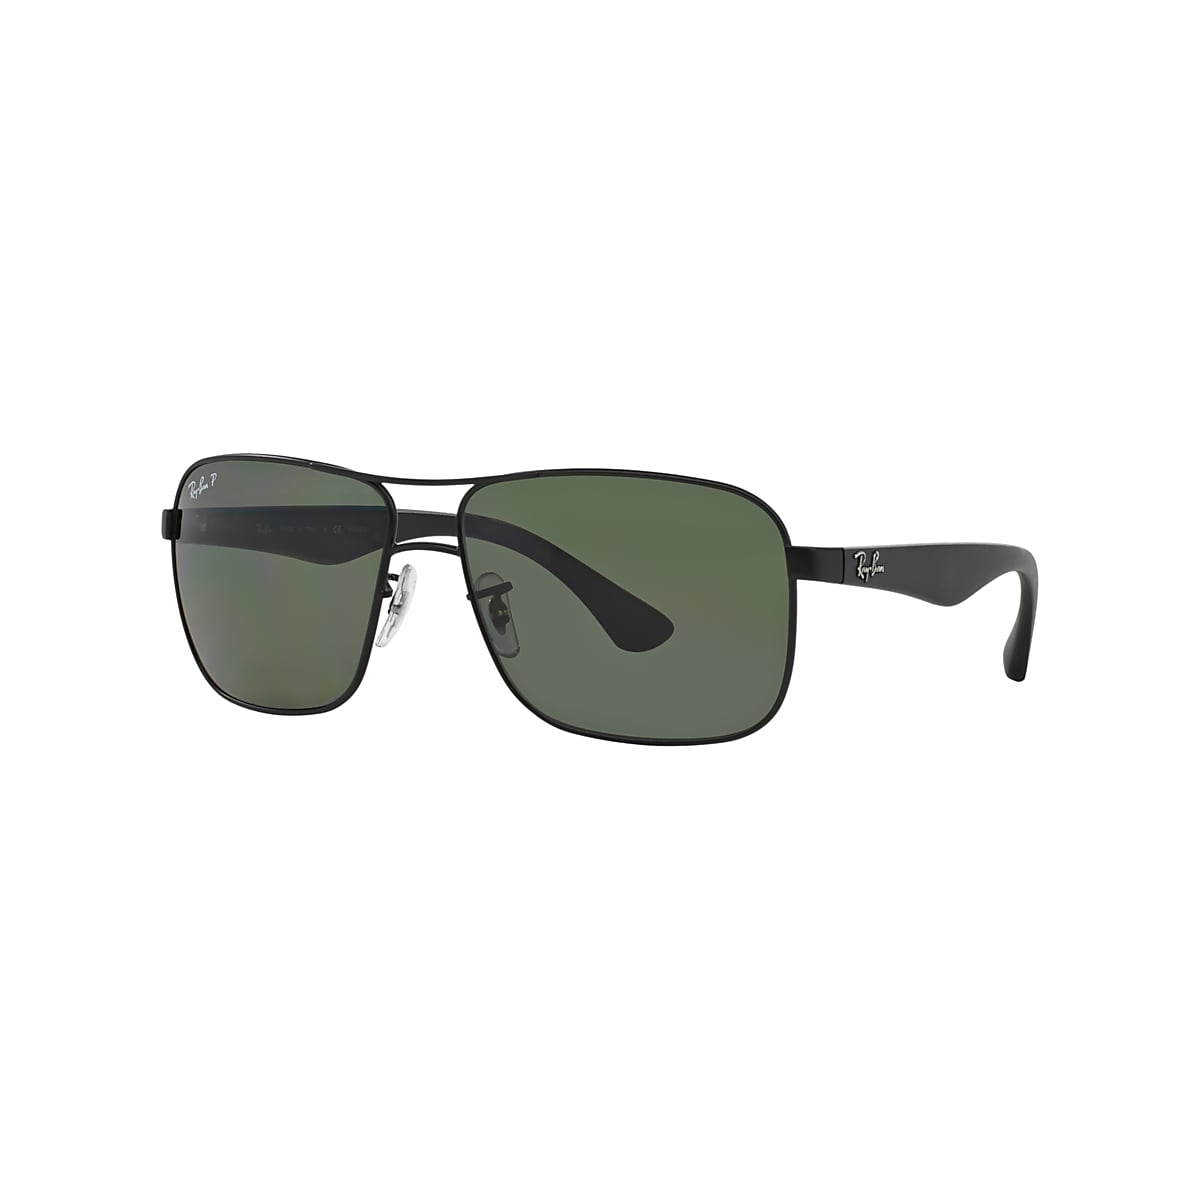 Ray-Ban RB3516 59 Green & Black Polarized Sunglasses | Sunglass Hut USA